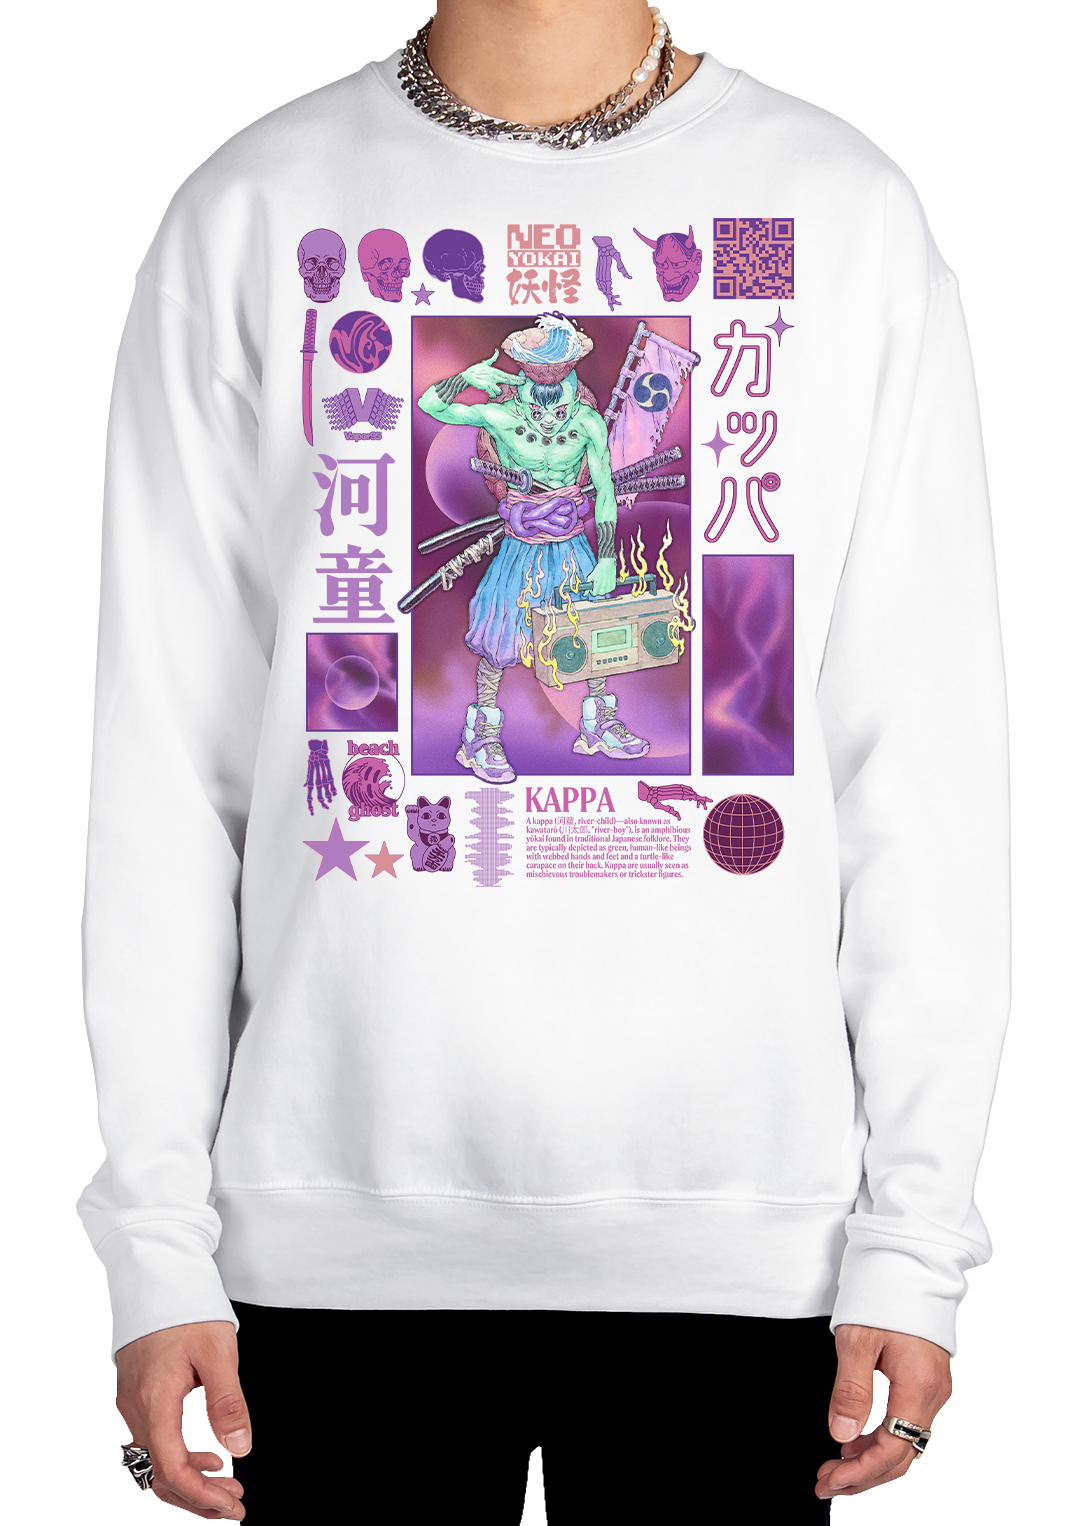 Vaporwave | Sweatshirt Clothing Aesthetic & – Vapor95 Kappa